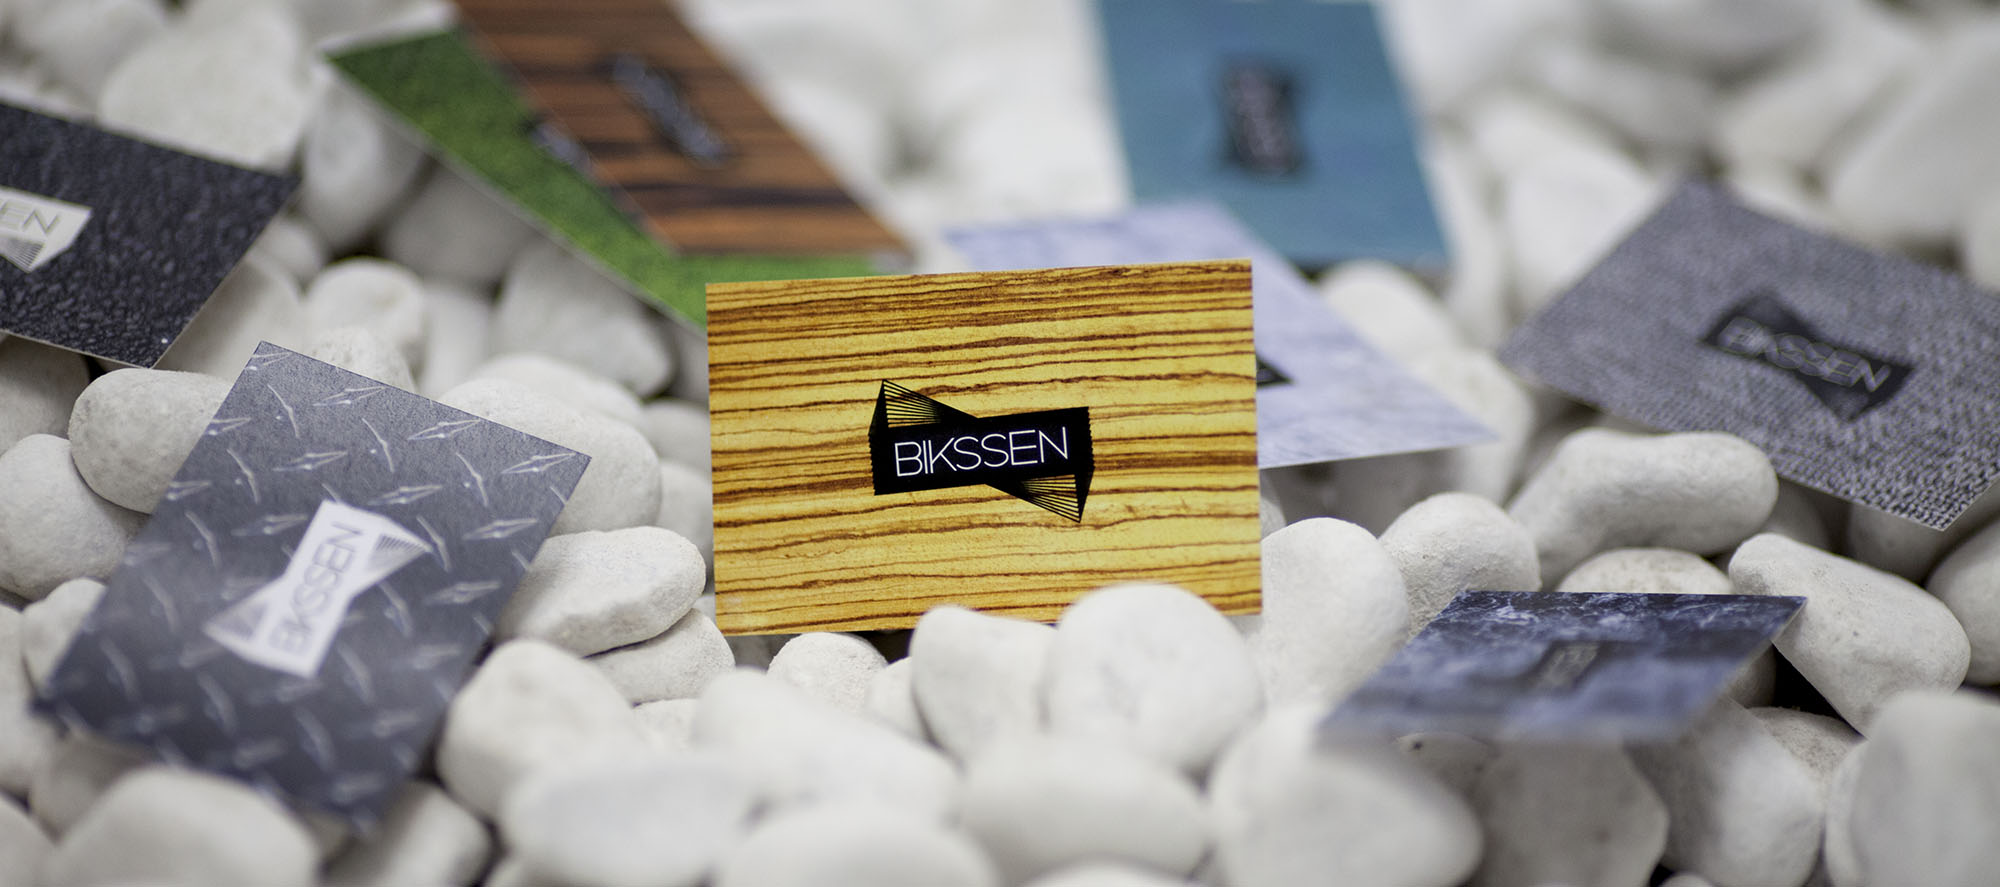 bikssen arquitectura design marca identidad tarjetas